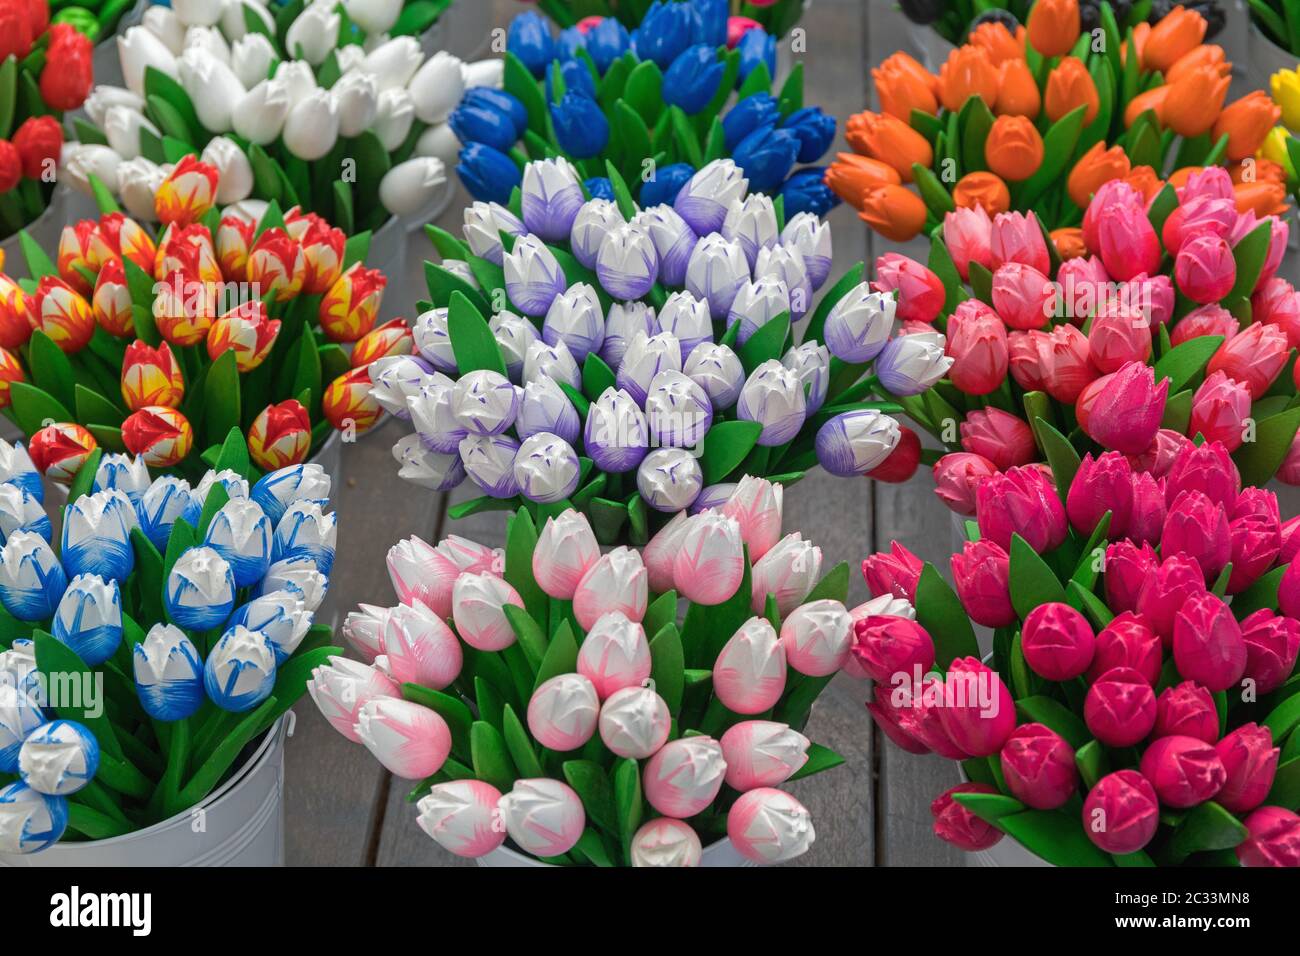 Viele bunte Holz- Tulpen Souvenirs in Eimern Stockfoto